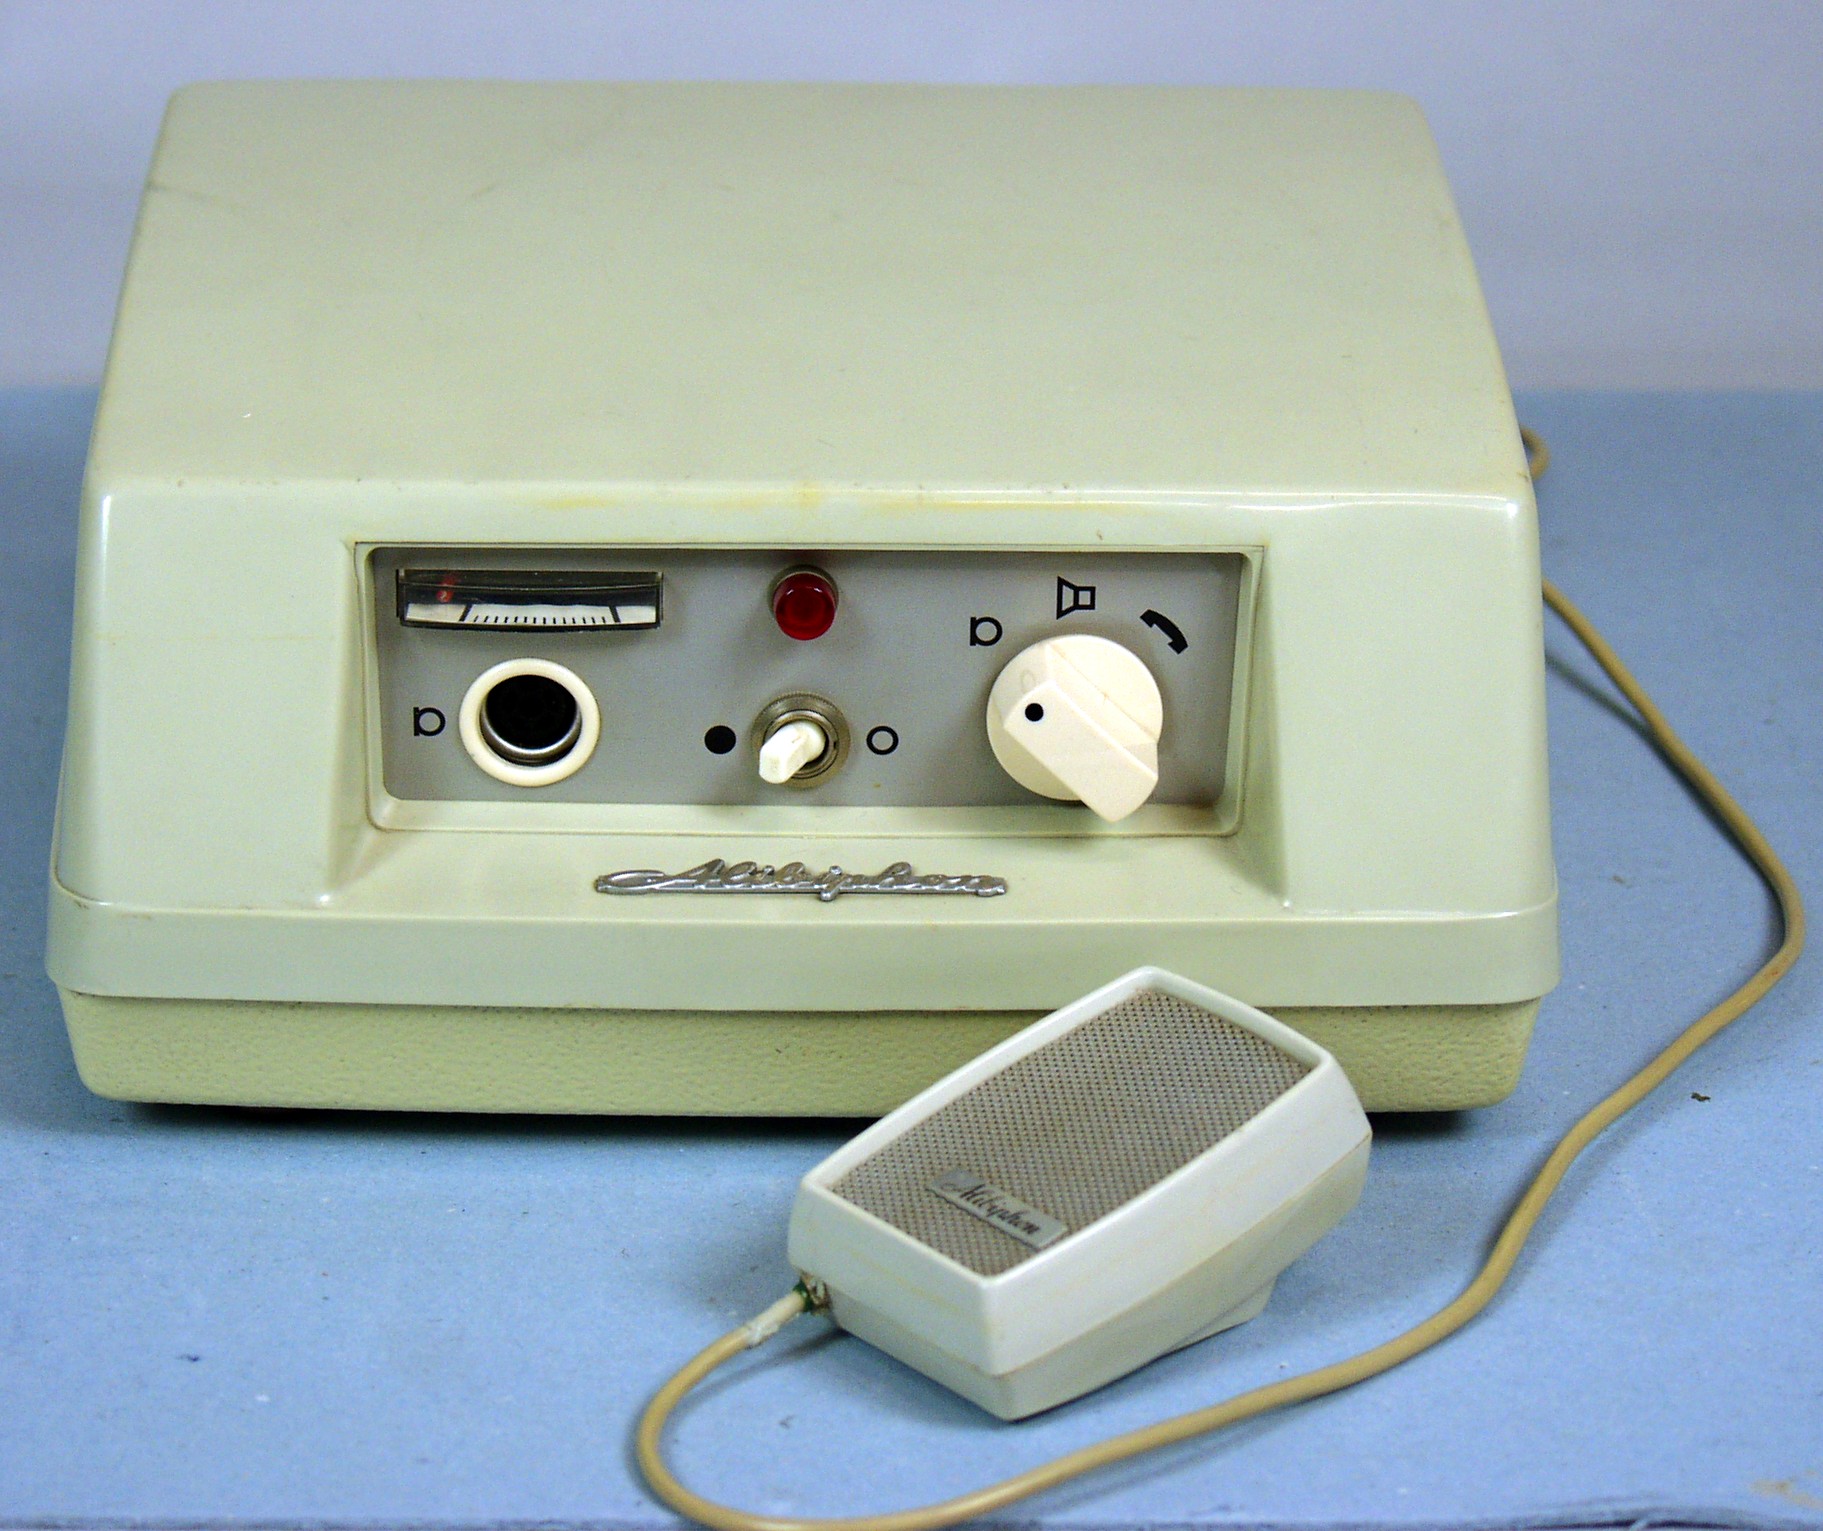 Anrufbeantworter "Alibiphon VA 74", Friedrich Merk Telefonbau GmbH, 1965